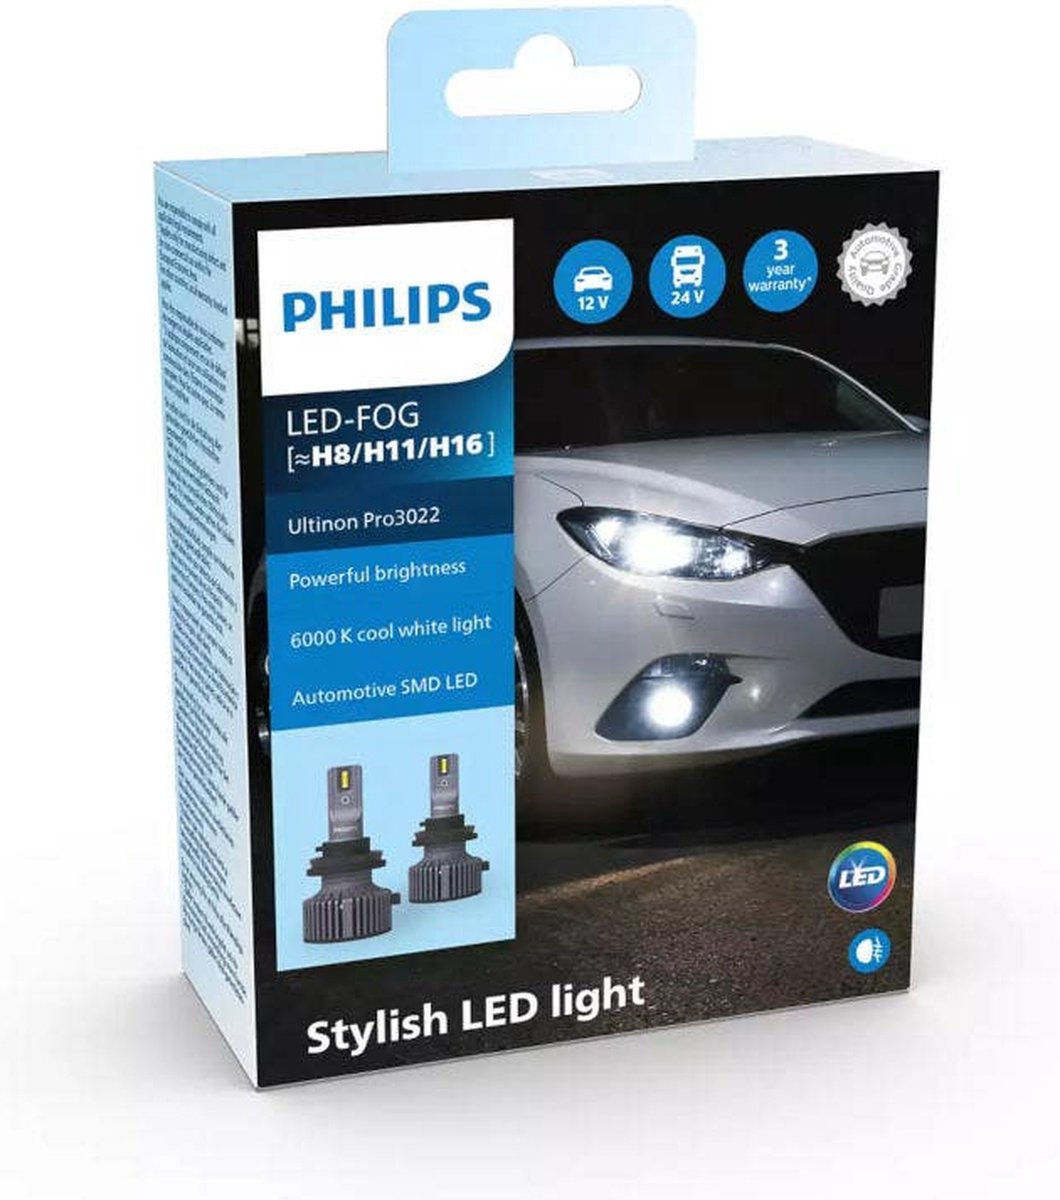 Philips Ultinon Pro3022 LED-HL H8 H11 H16 set LUM11366U3022X2